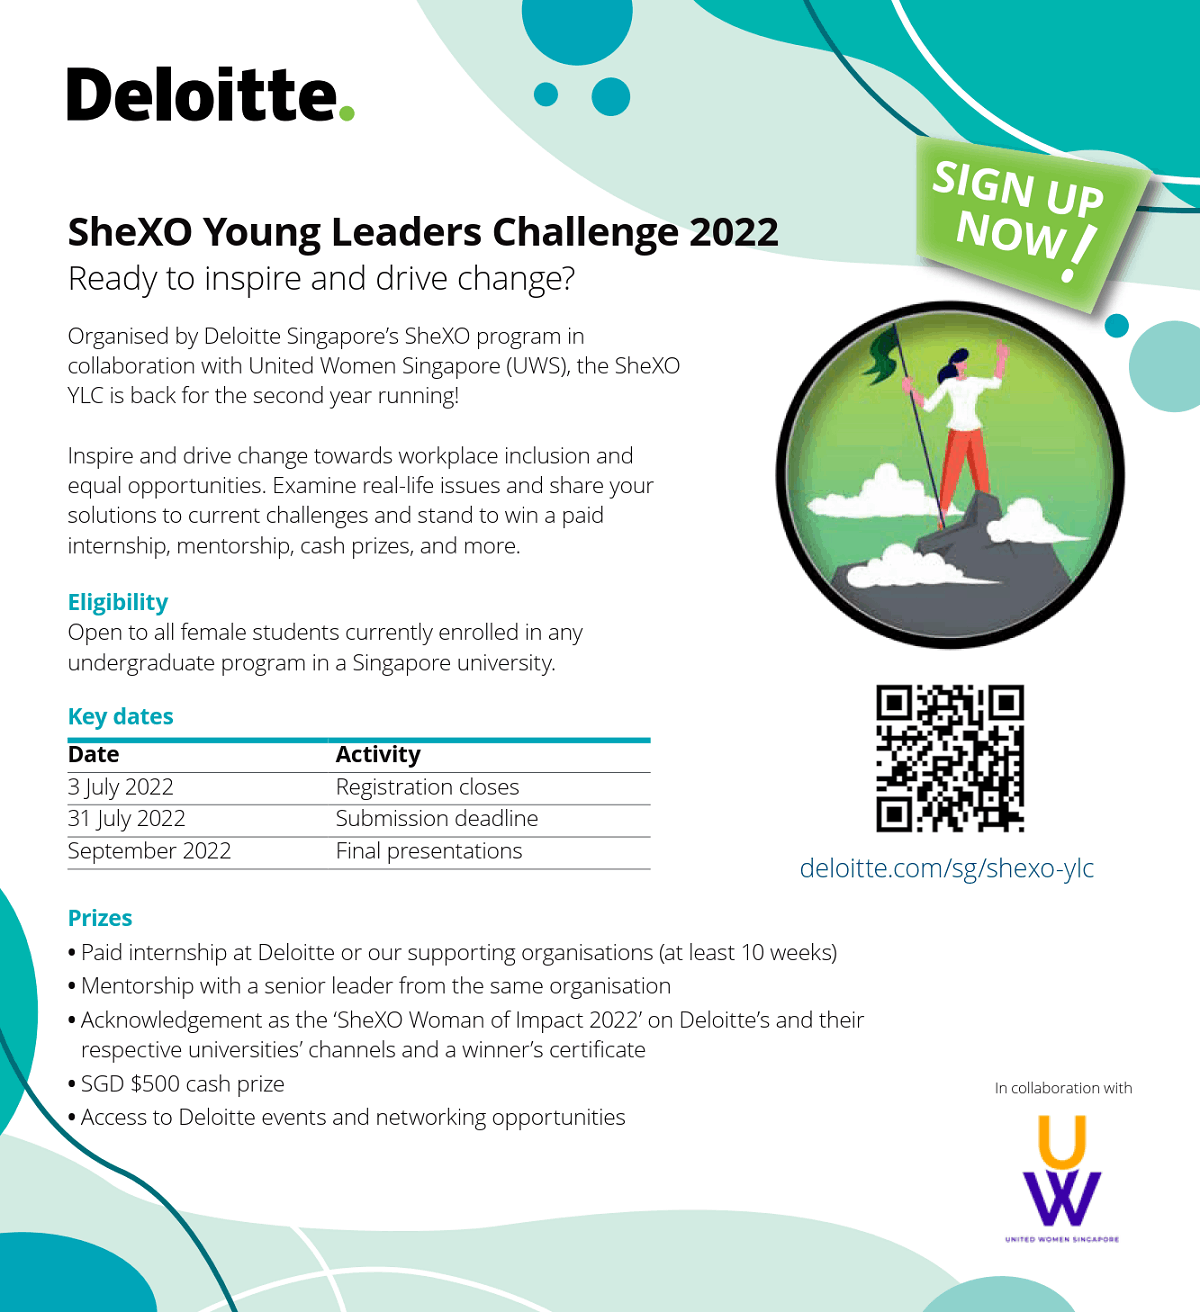 Deloitte SheXO Young Leaders Challenge 2022 EDM image